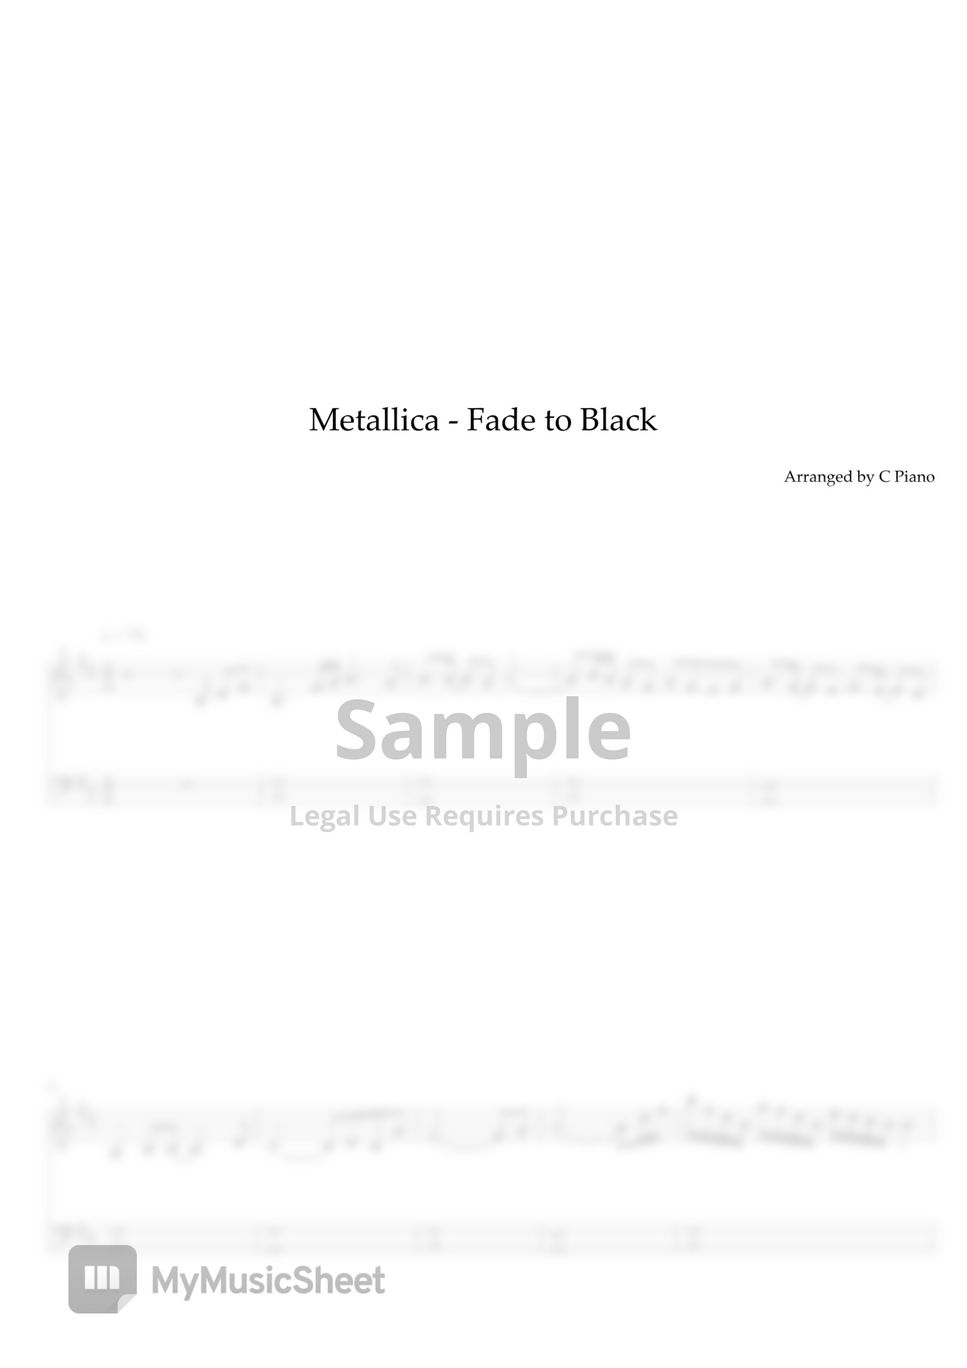 Metallica - Fade to Black (Easy Version) by C Piano